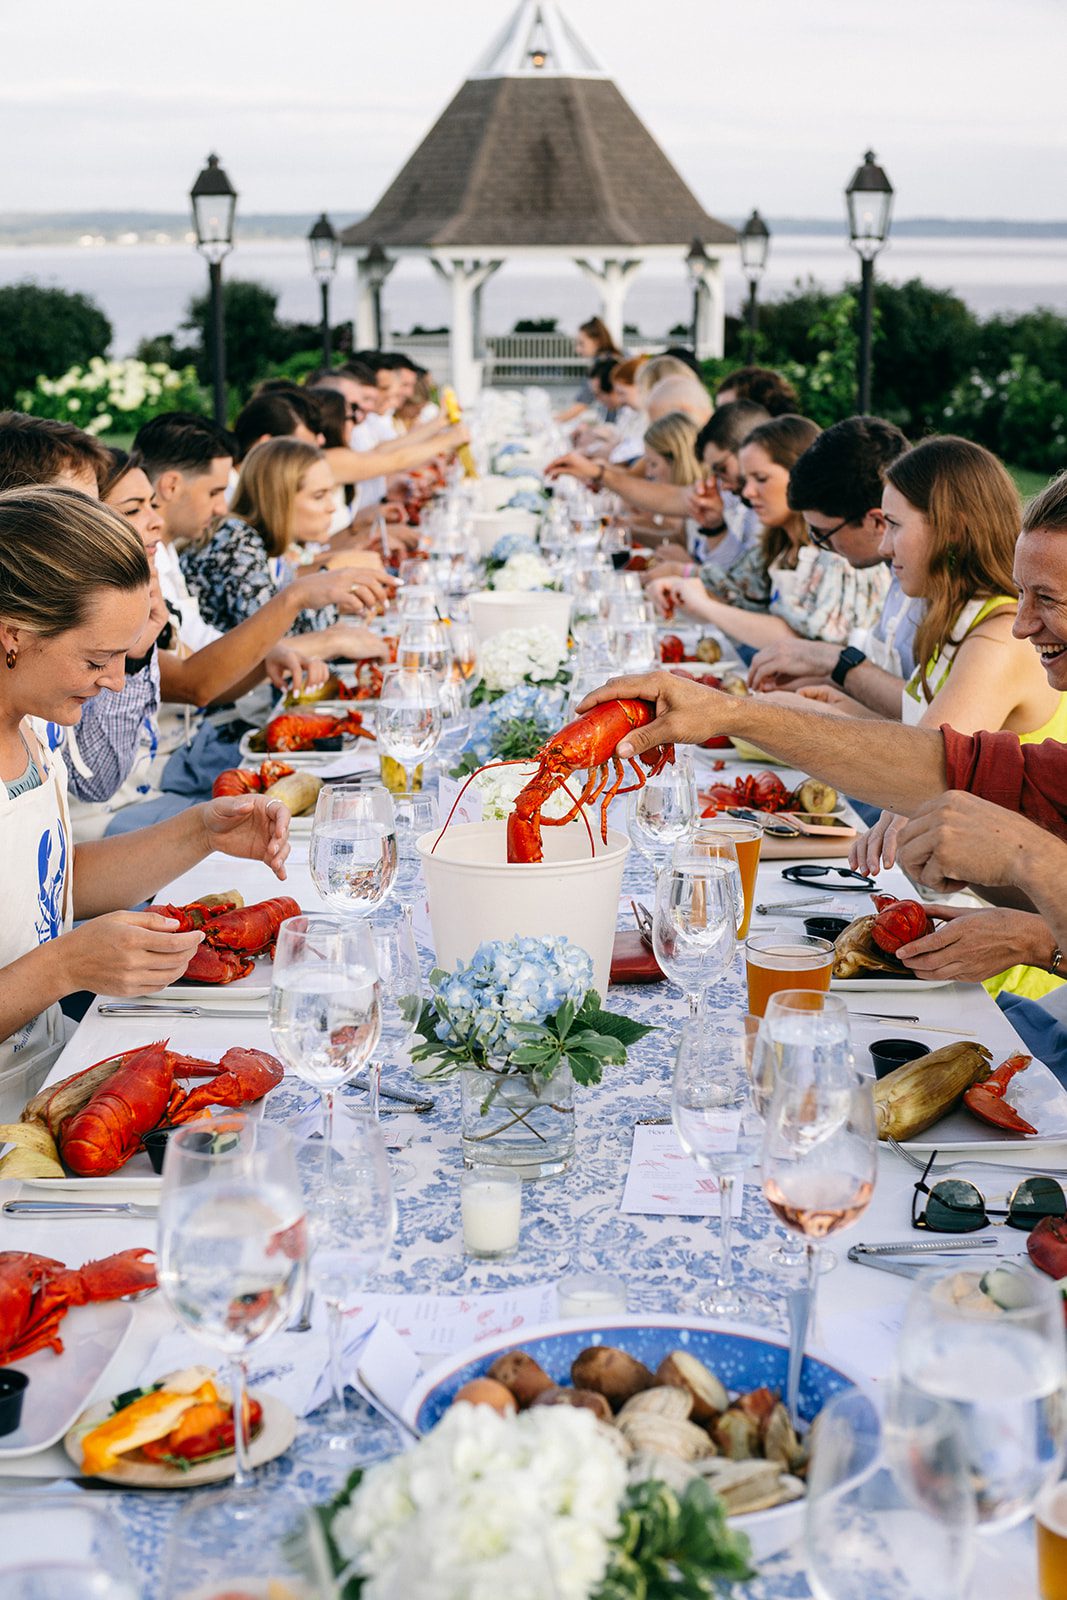 Al Fresco Lobster Bake at French's Point Coastal Maine Wedding Venue